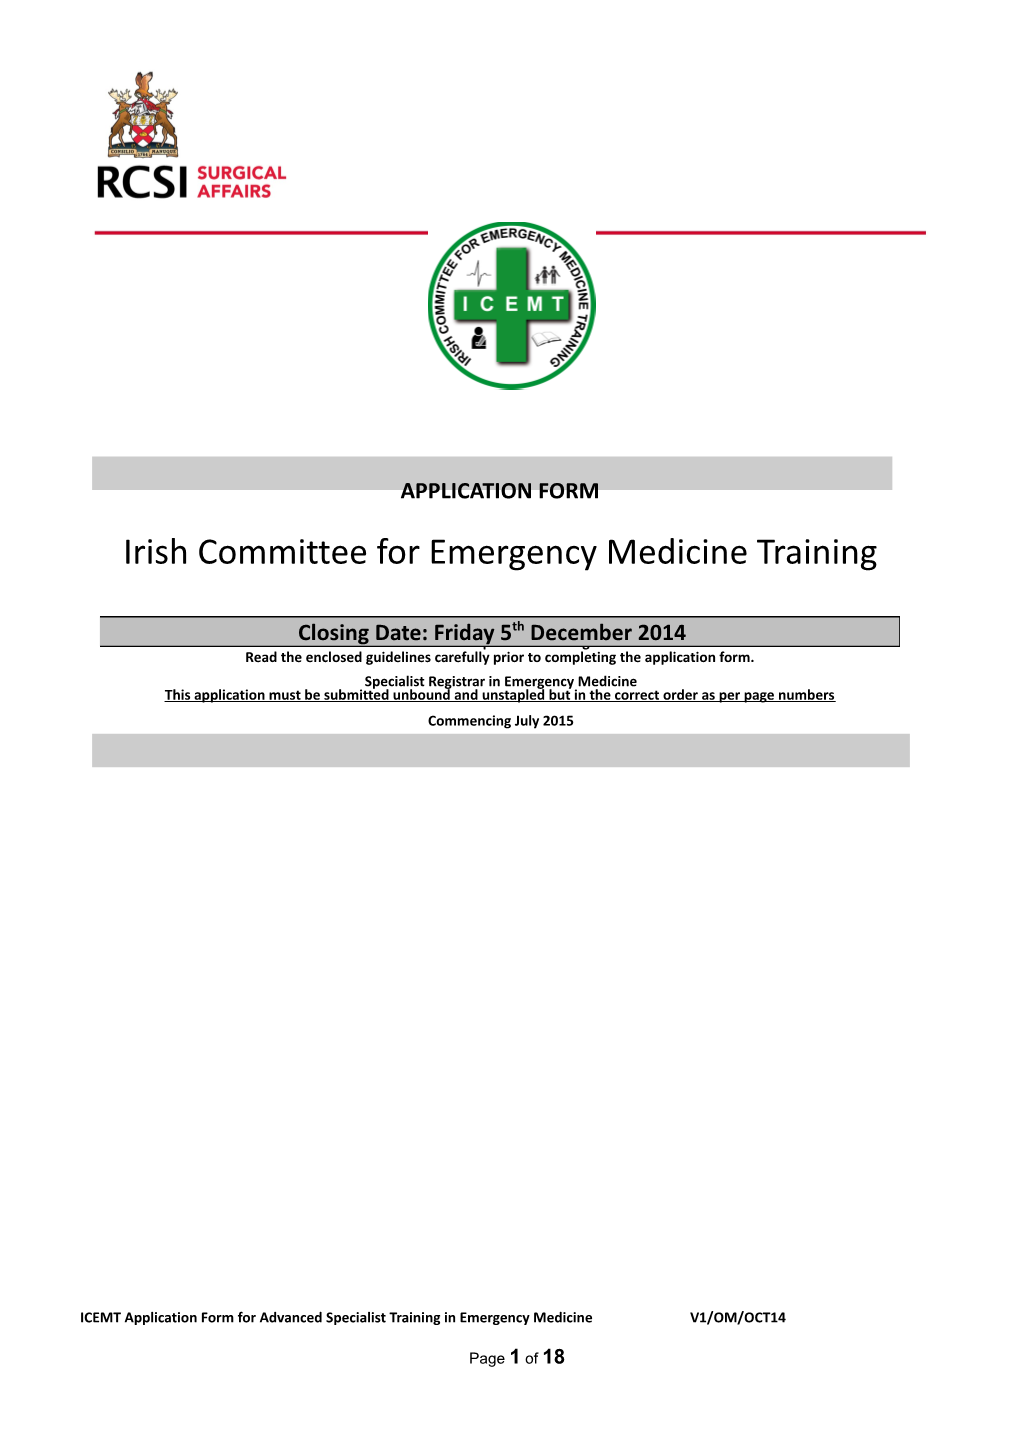 ACEMT Application Form for HST in Emergency Medicine s1